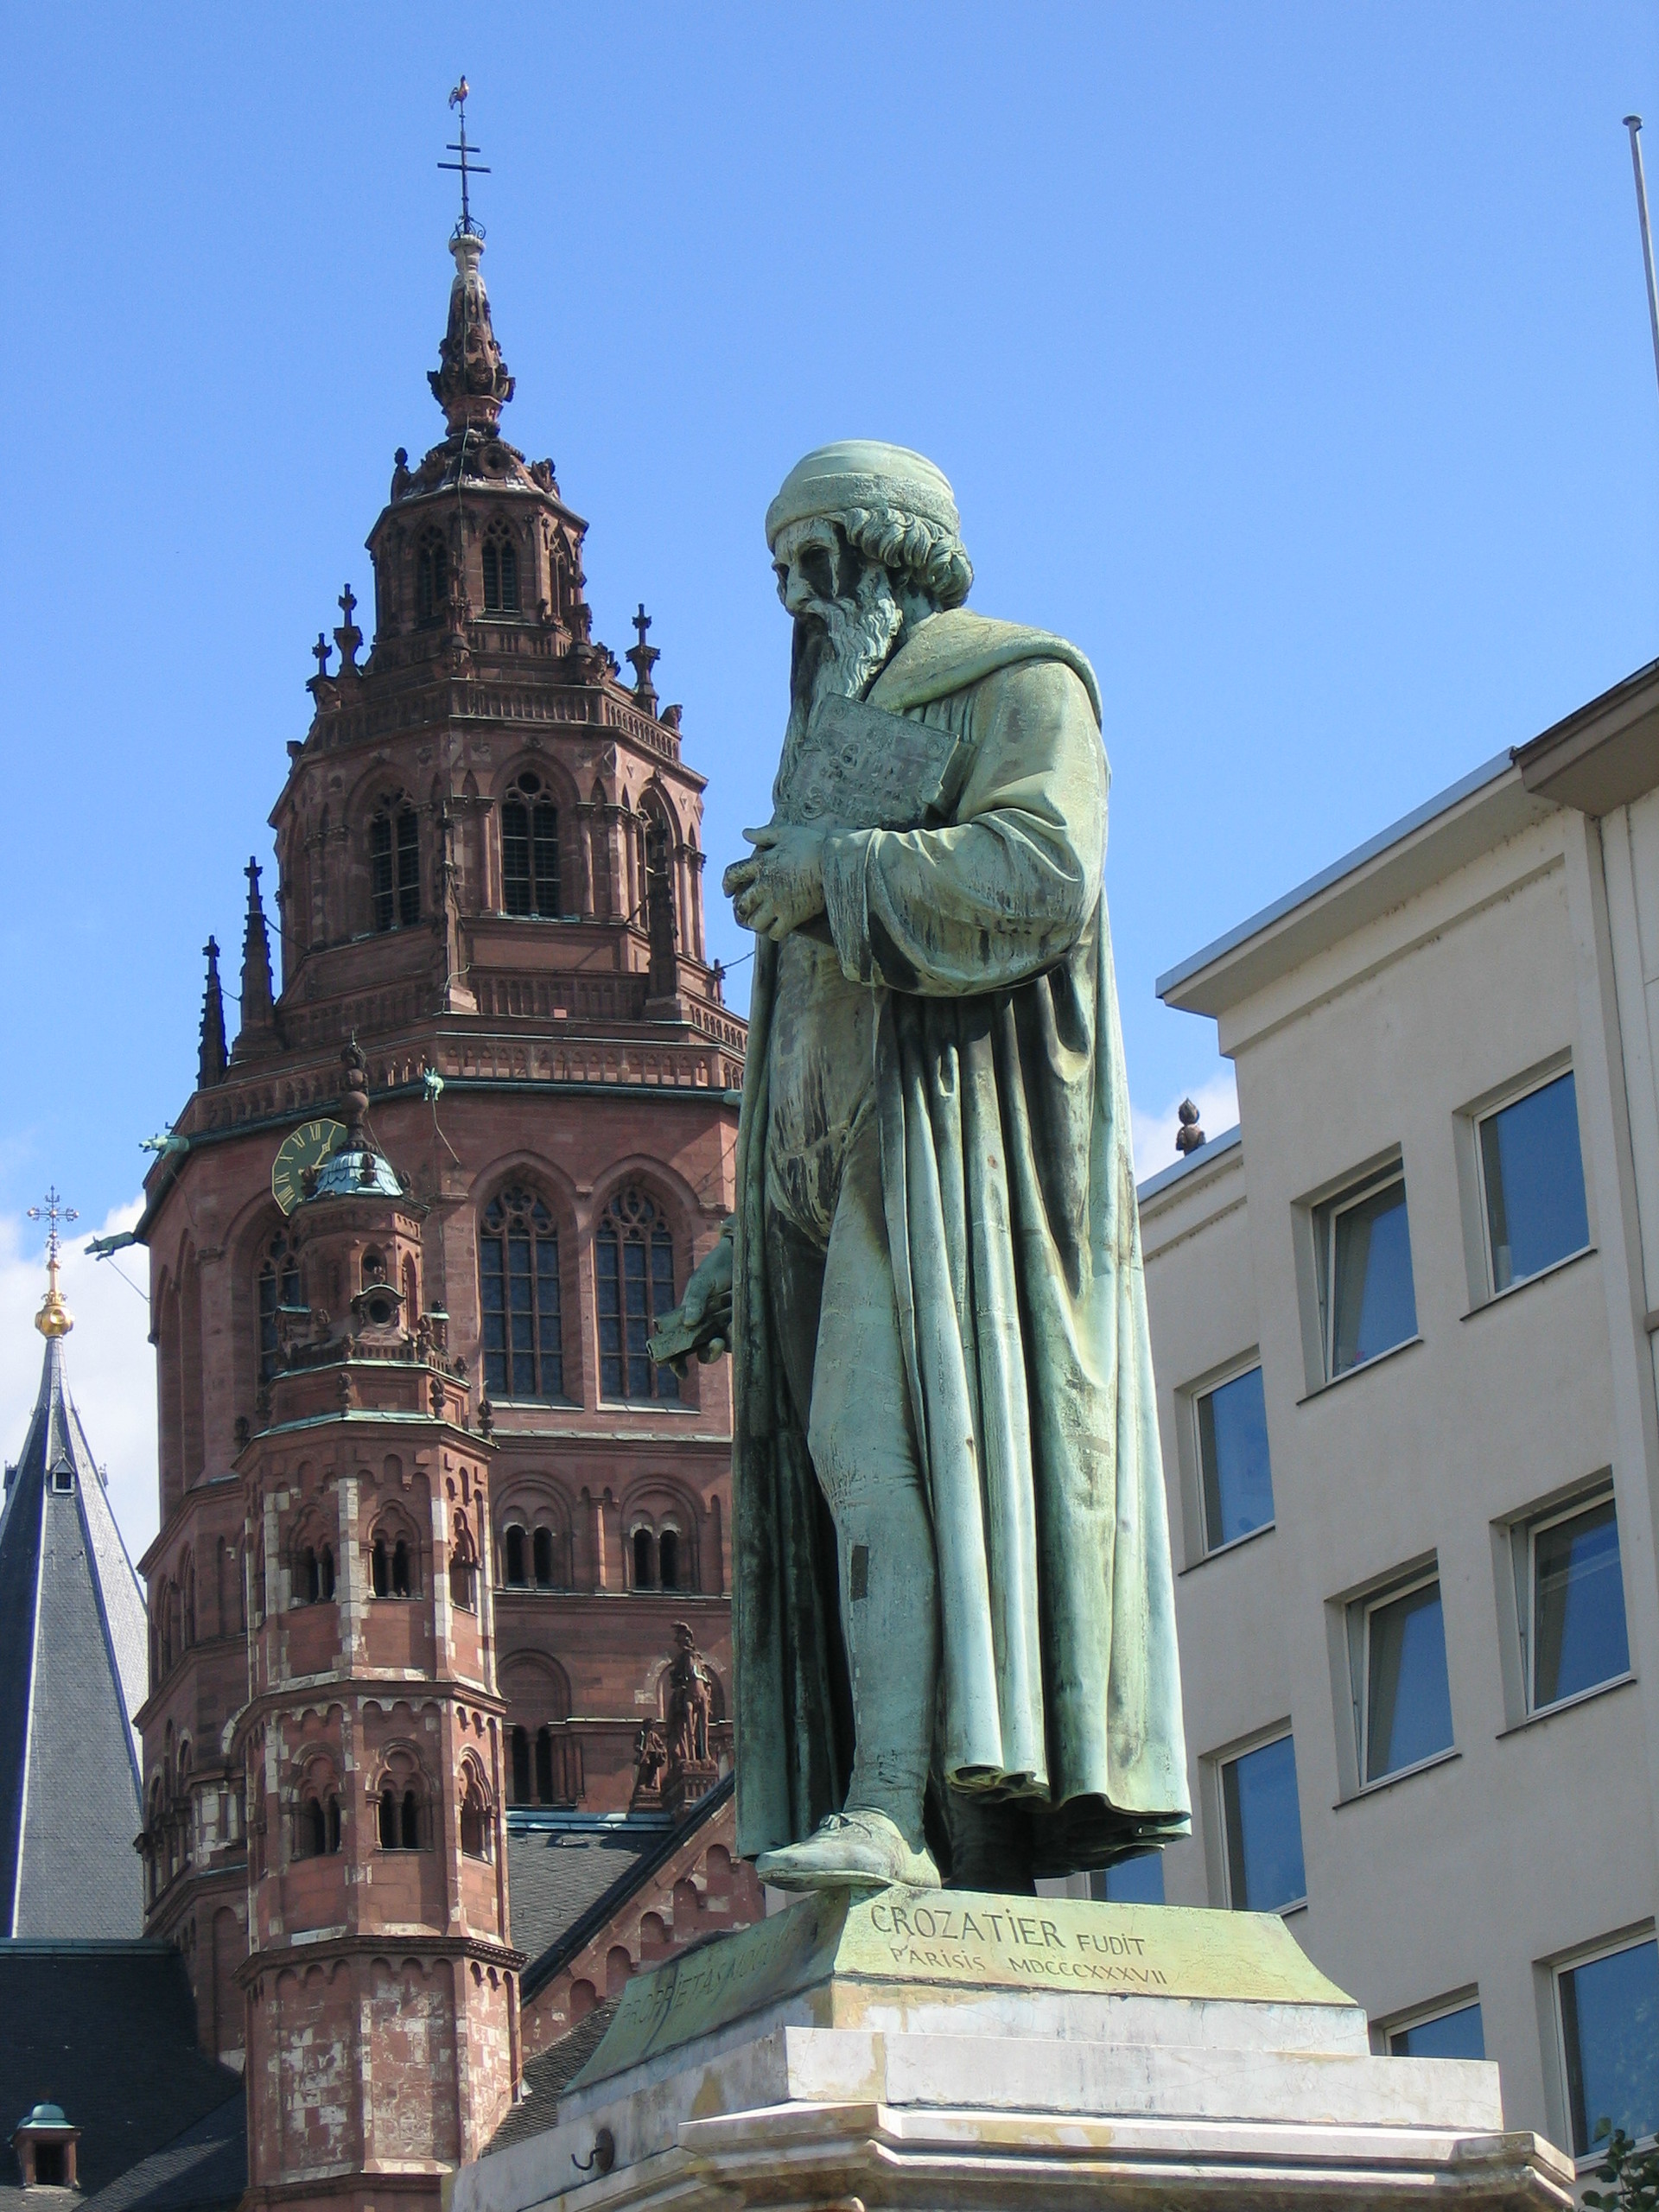 Hans' Erasmus Experience in Mainz, Germany